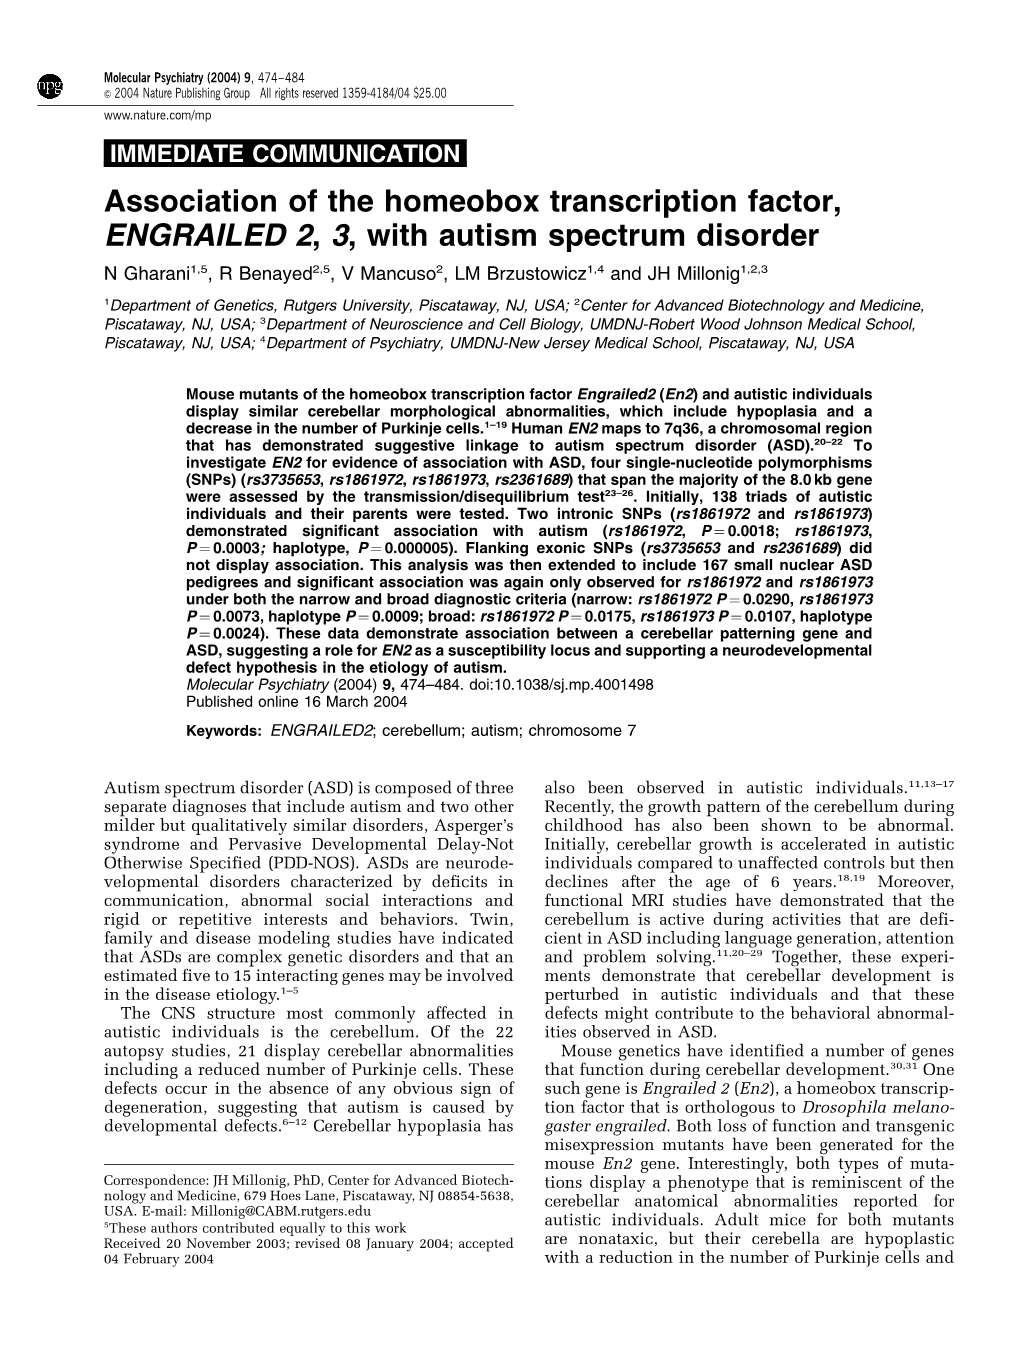 Association of the Homeobox Transcription Factor